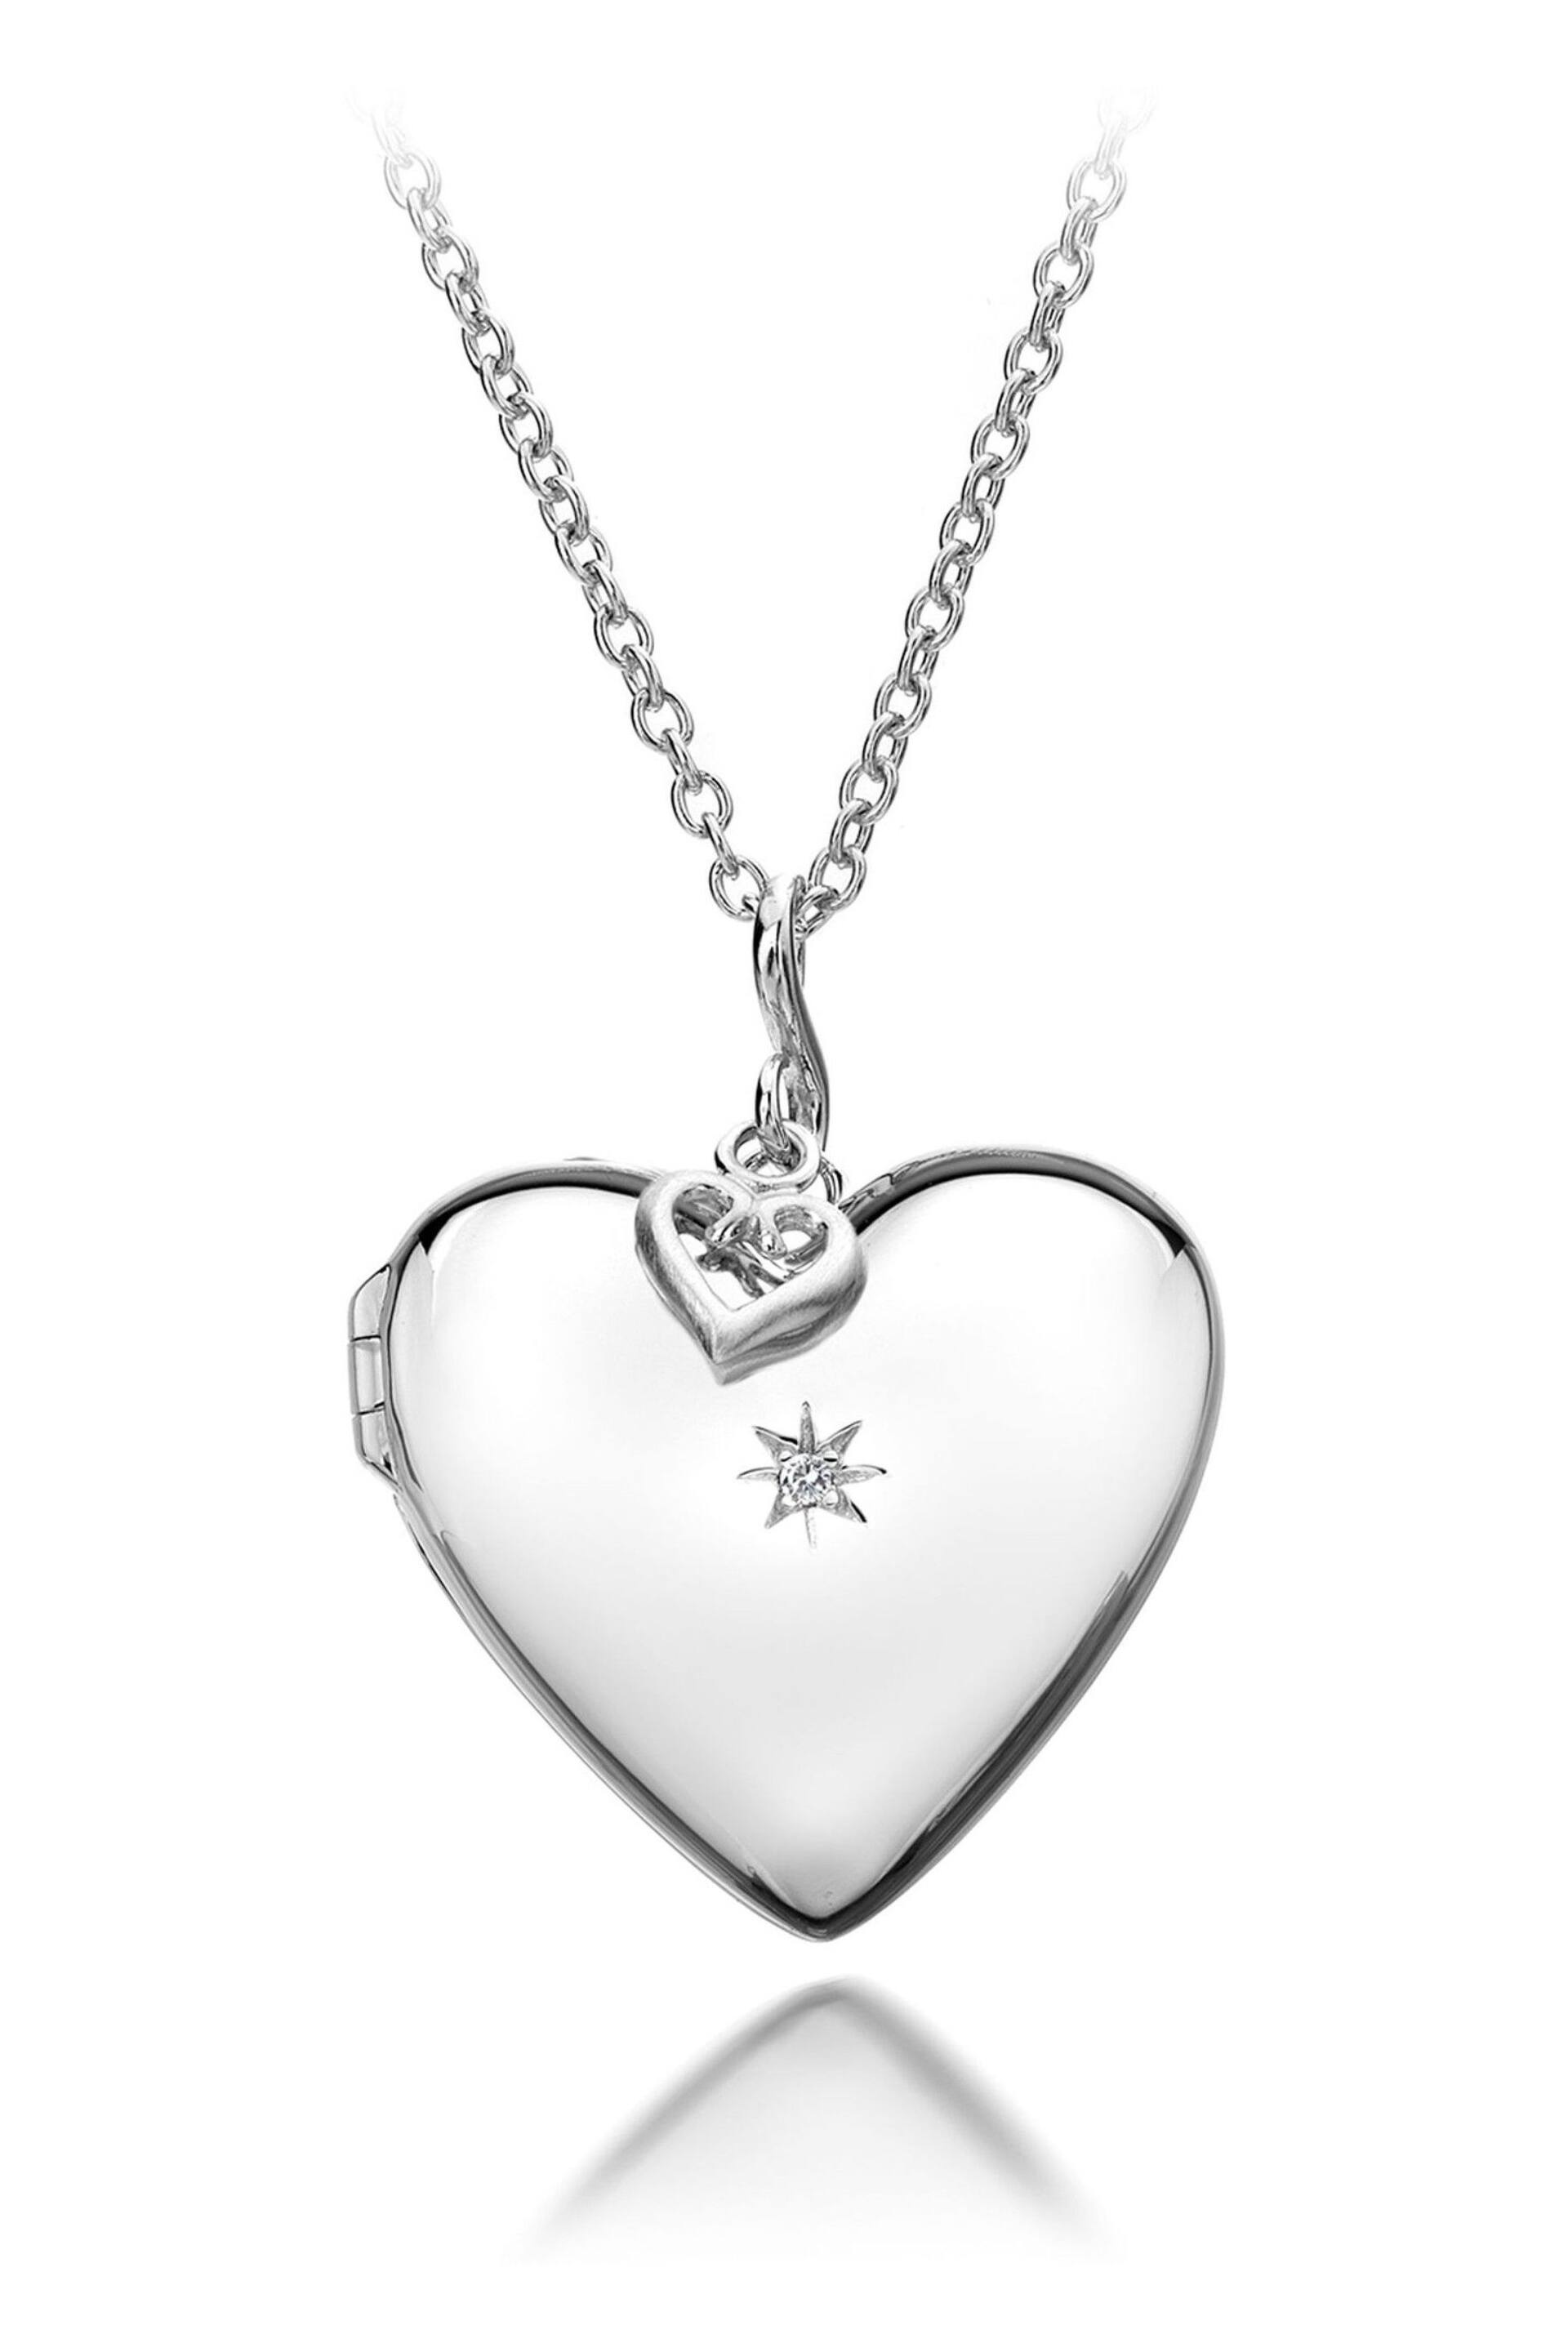 Hot Diamonds Silver Tone Romantic Heart Locket Necklace - Image 2 of 3